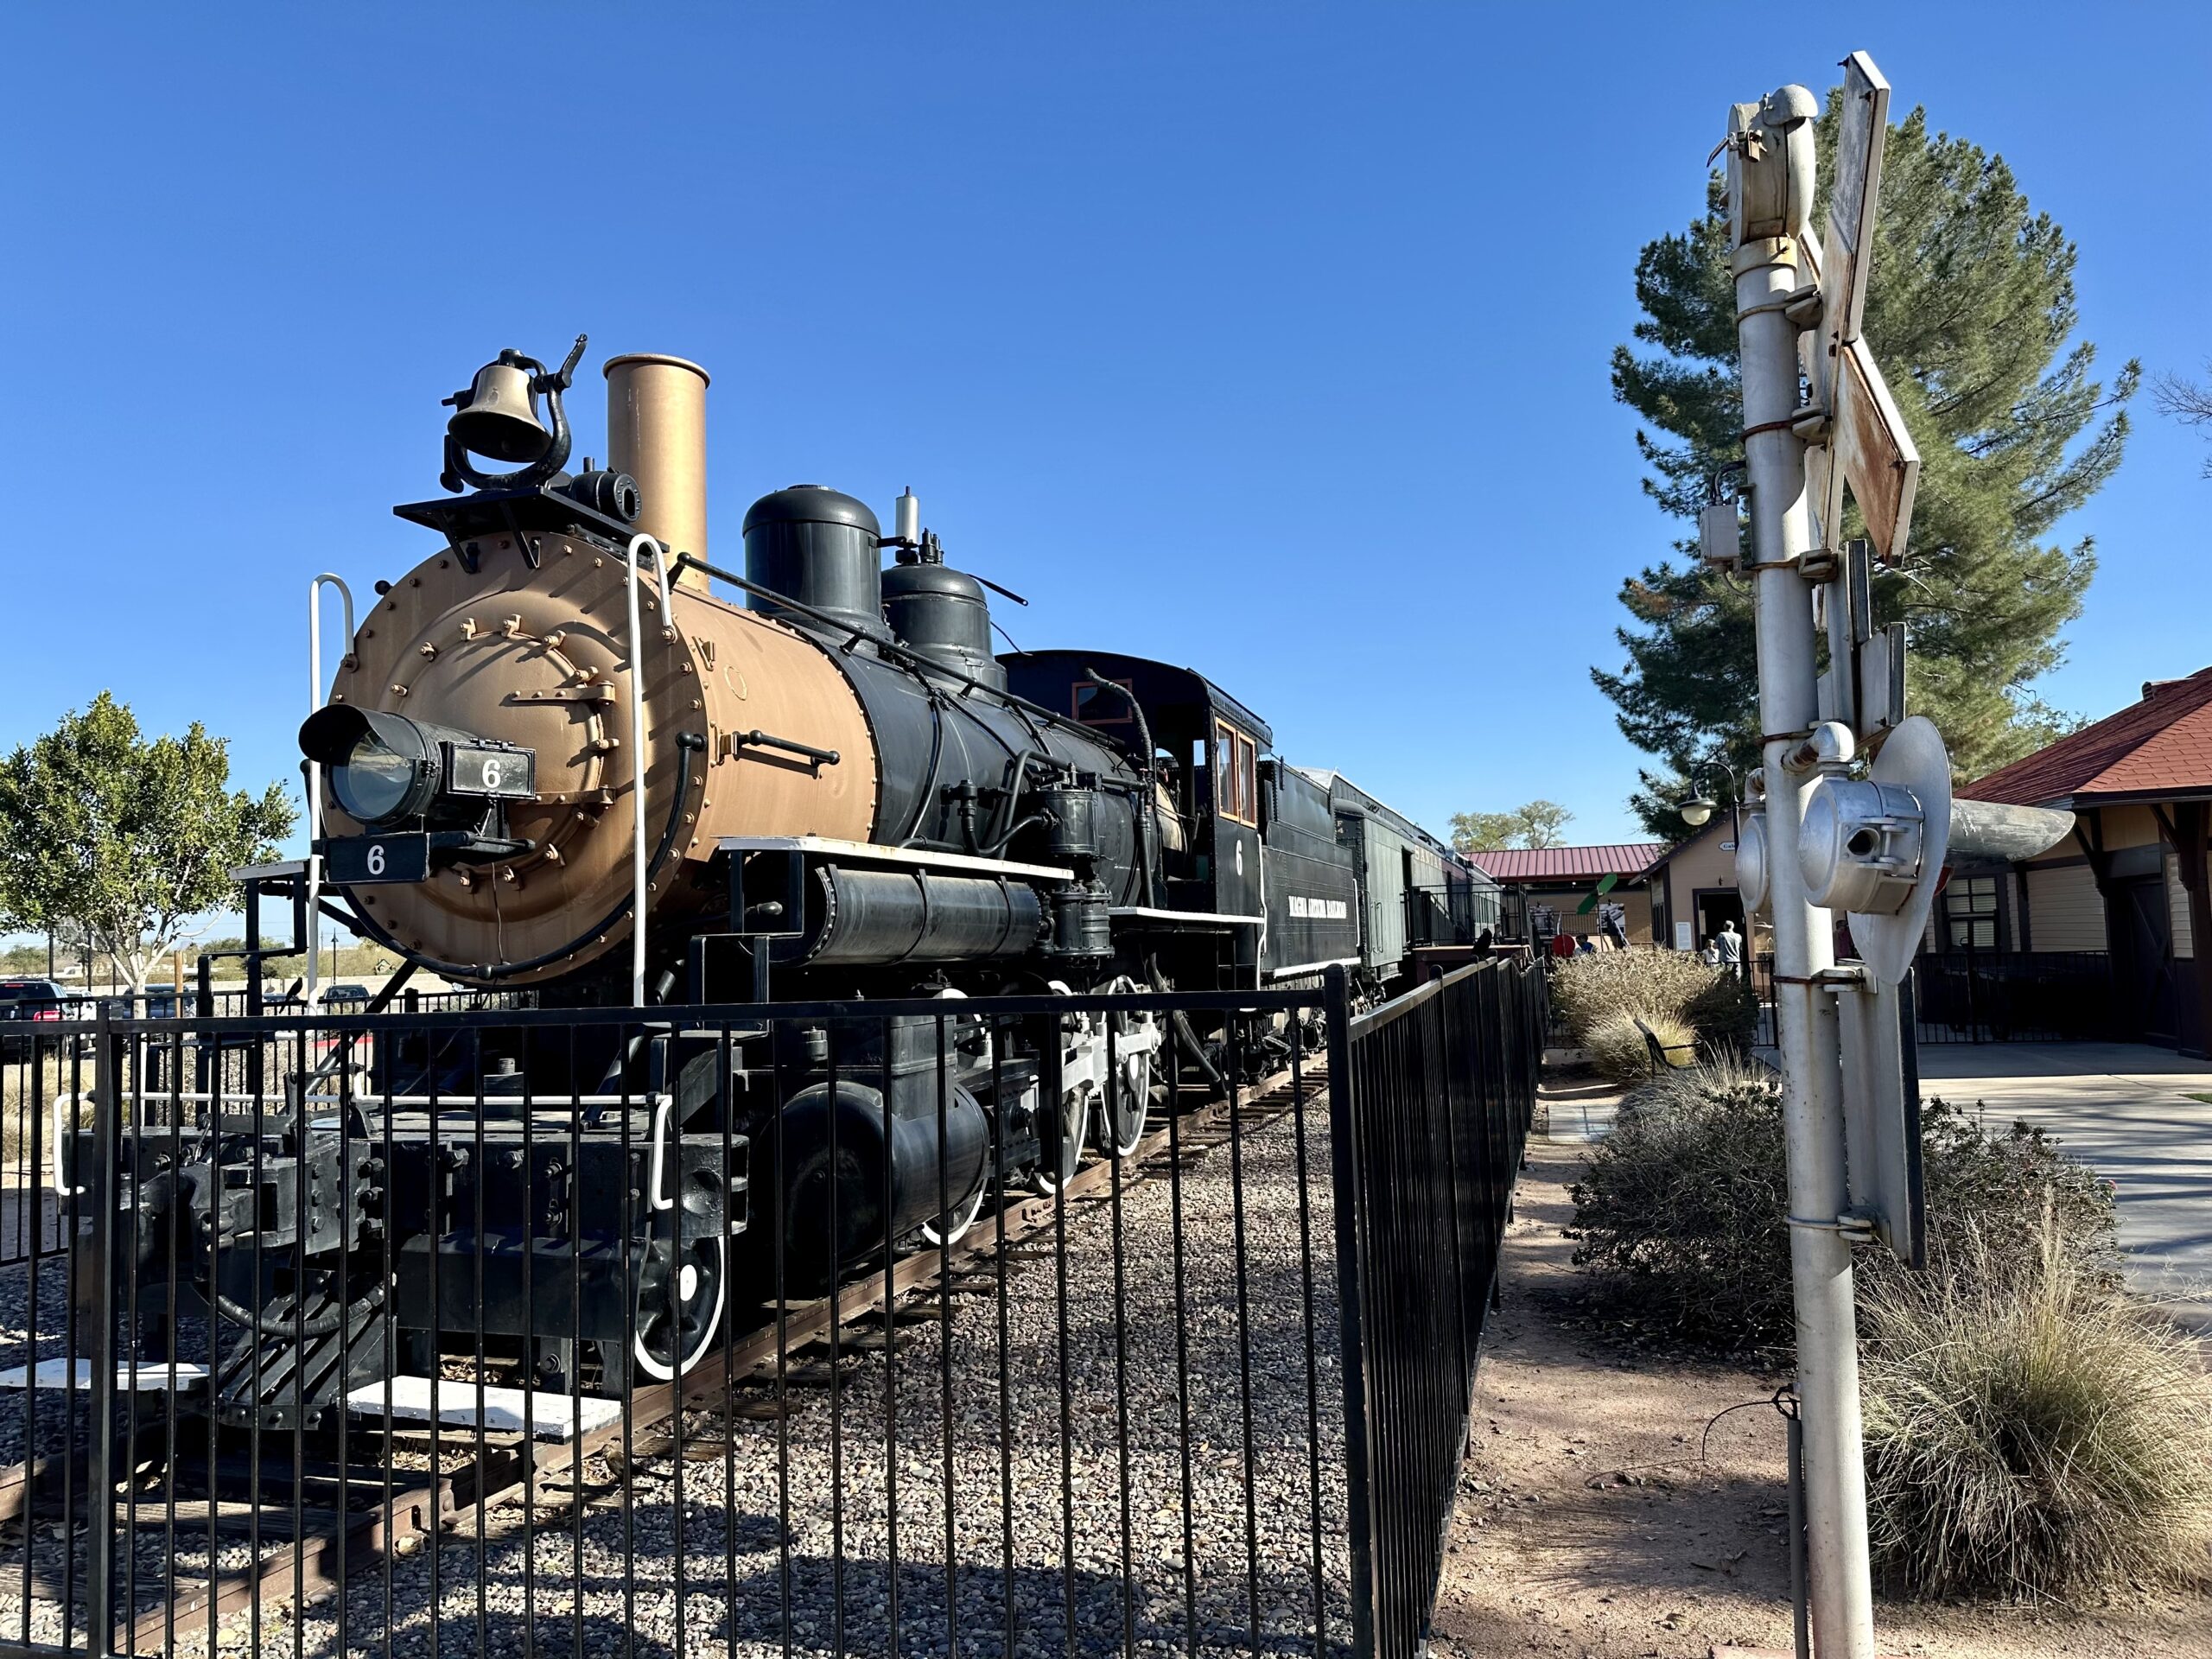 McCormick-Stillman Railroad Park, Scottsdale, Arizona